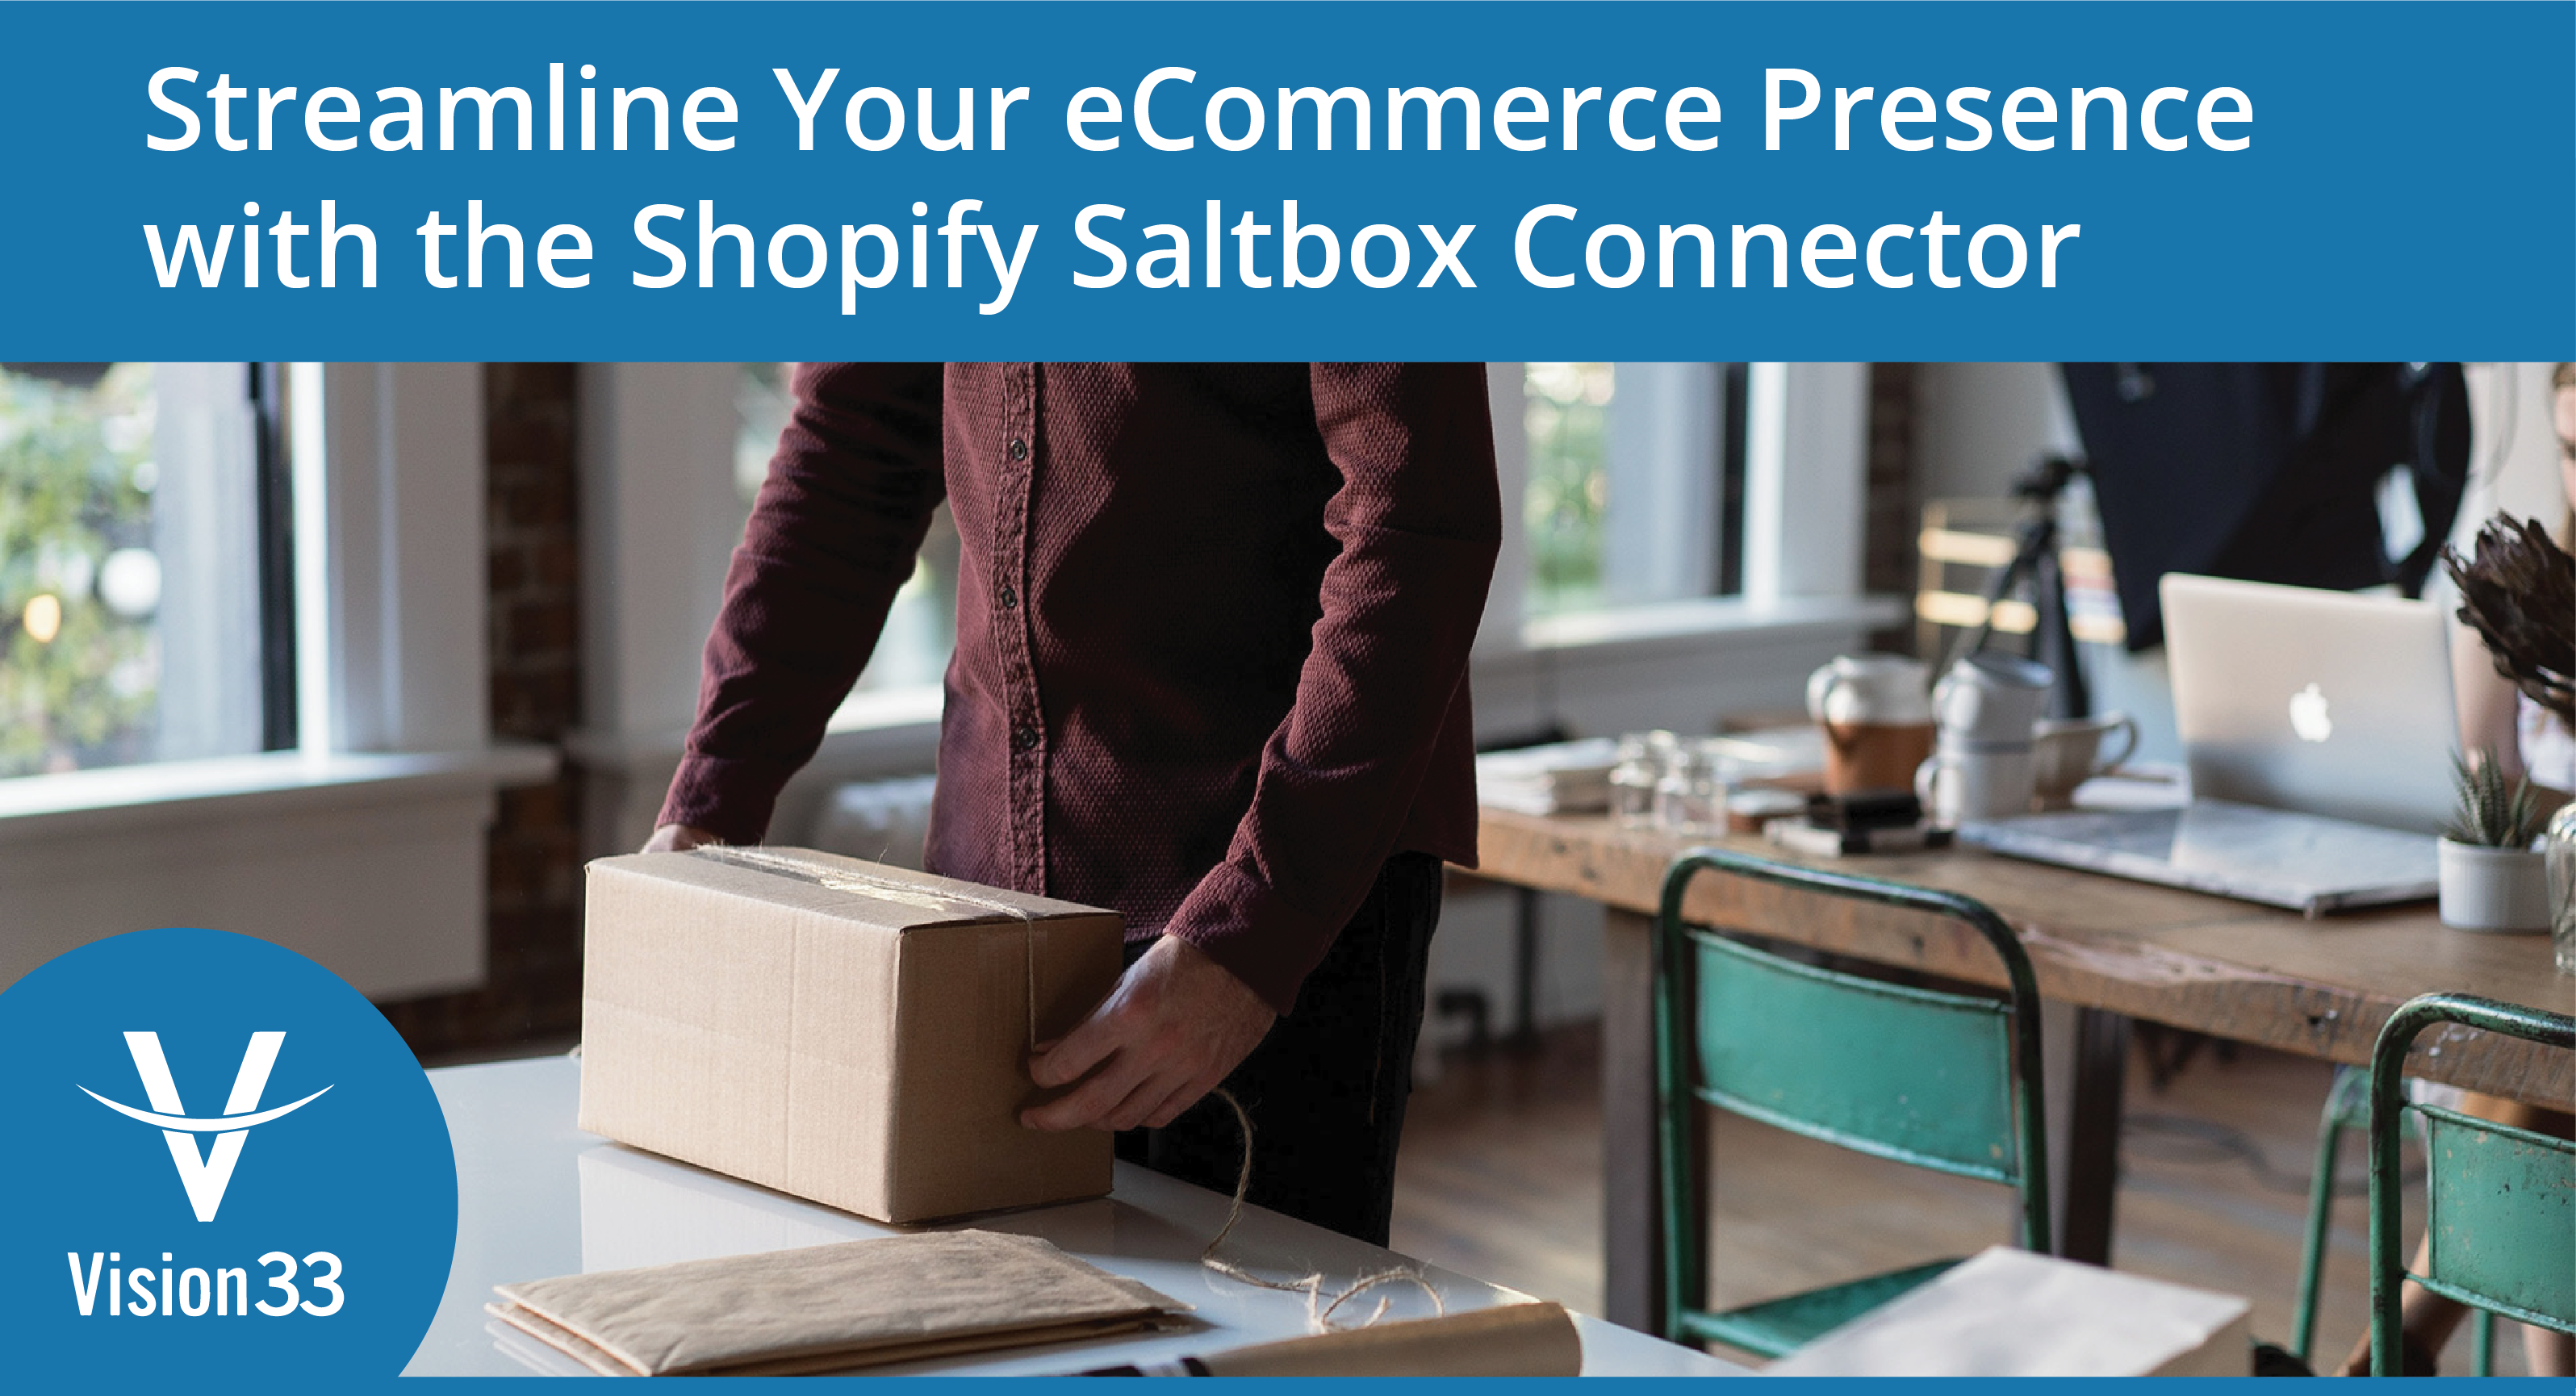 Shopify-Saltbox-Connector-Blog-nobtn